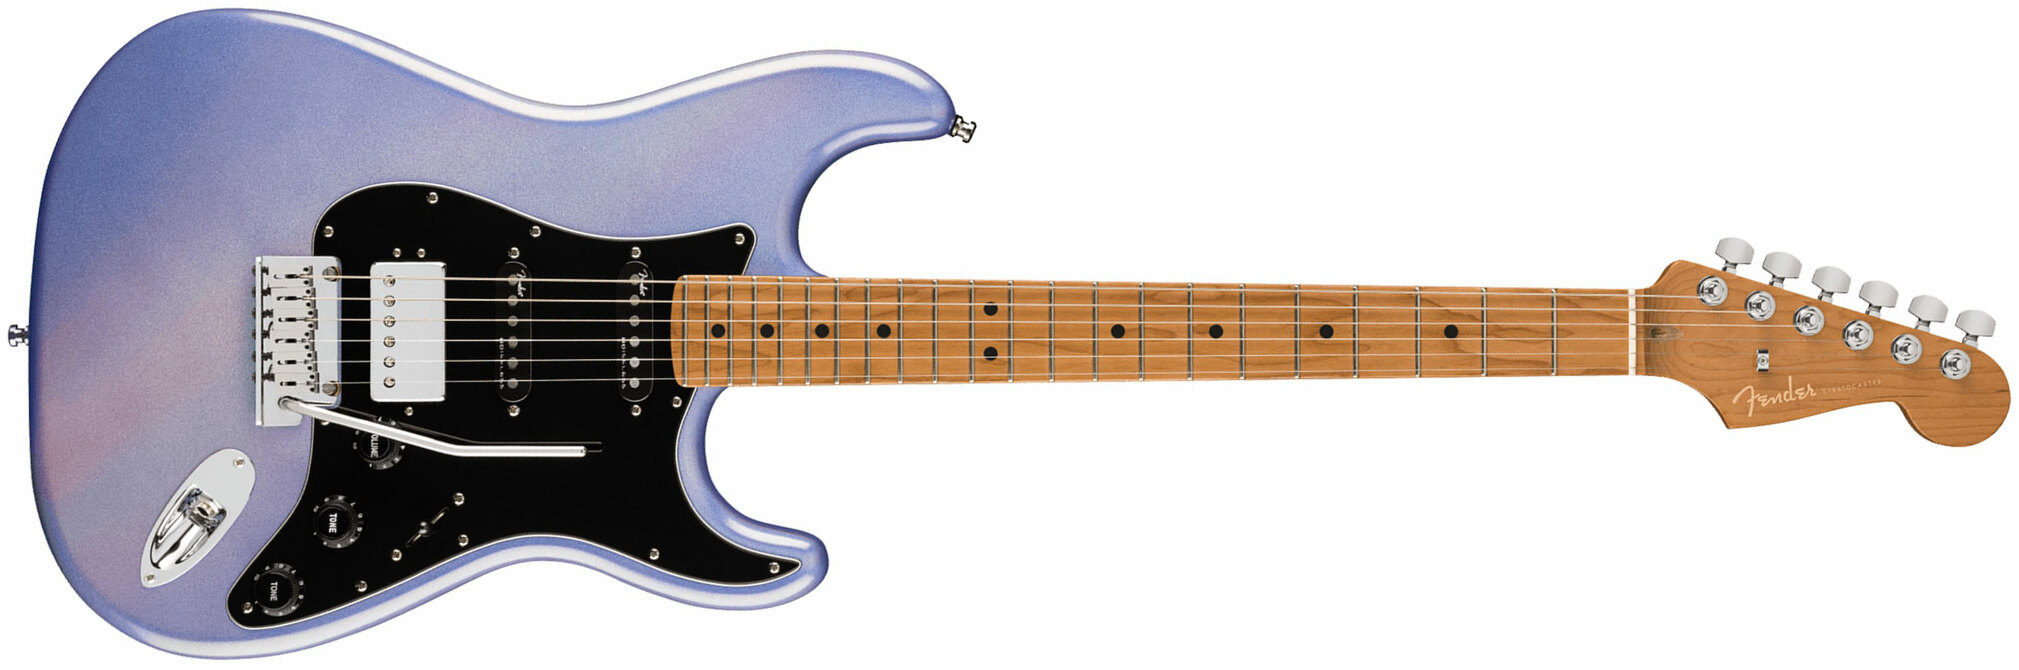 Fender Strat 70th Anniversary American Ultra Ltd Usa Hss Trem Mn - Amethyst - E-Gitarre in Str-Form - Main picture